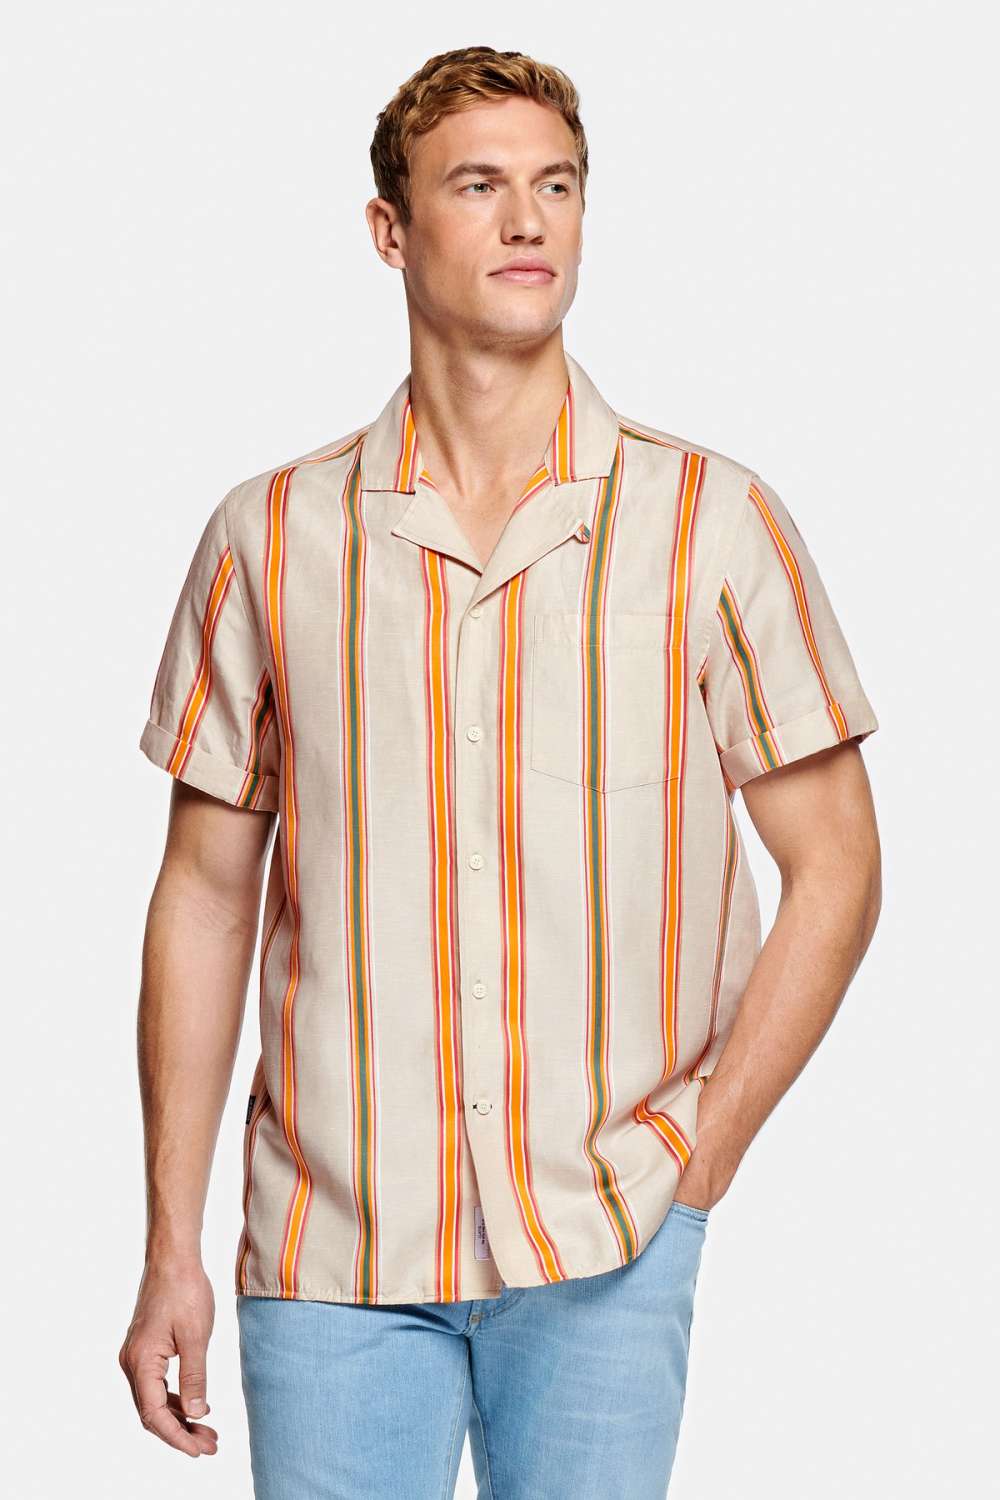 Arancione Stripes - The Summer Shirt